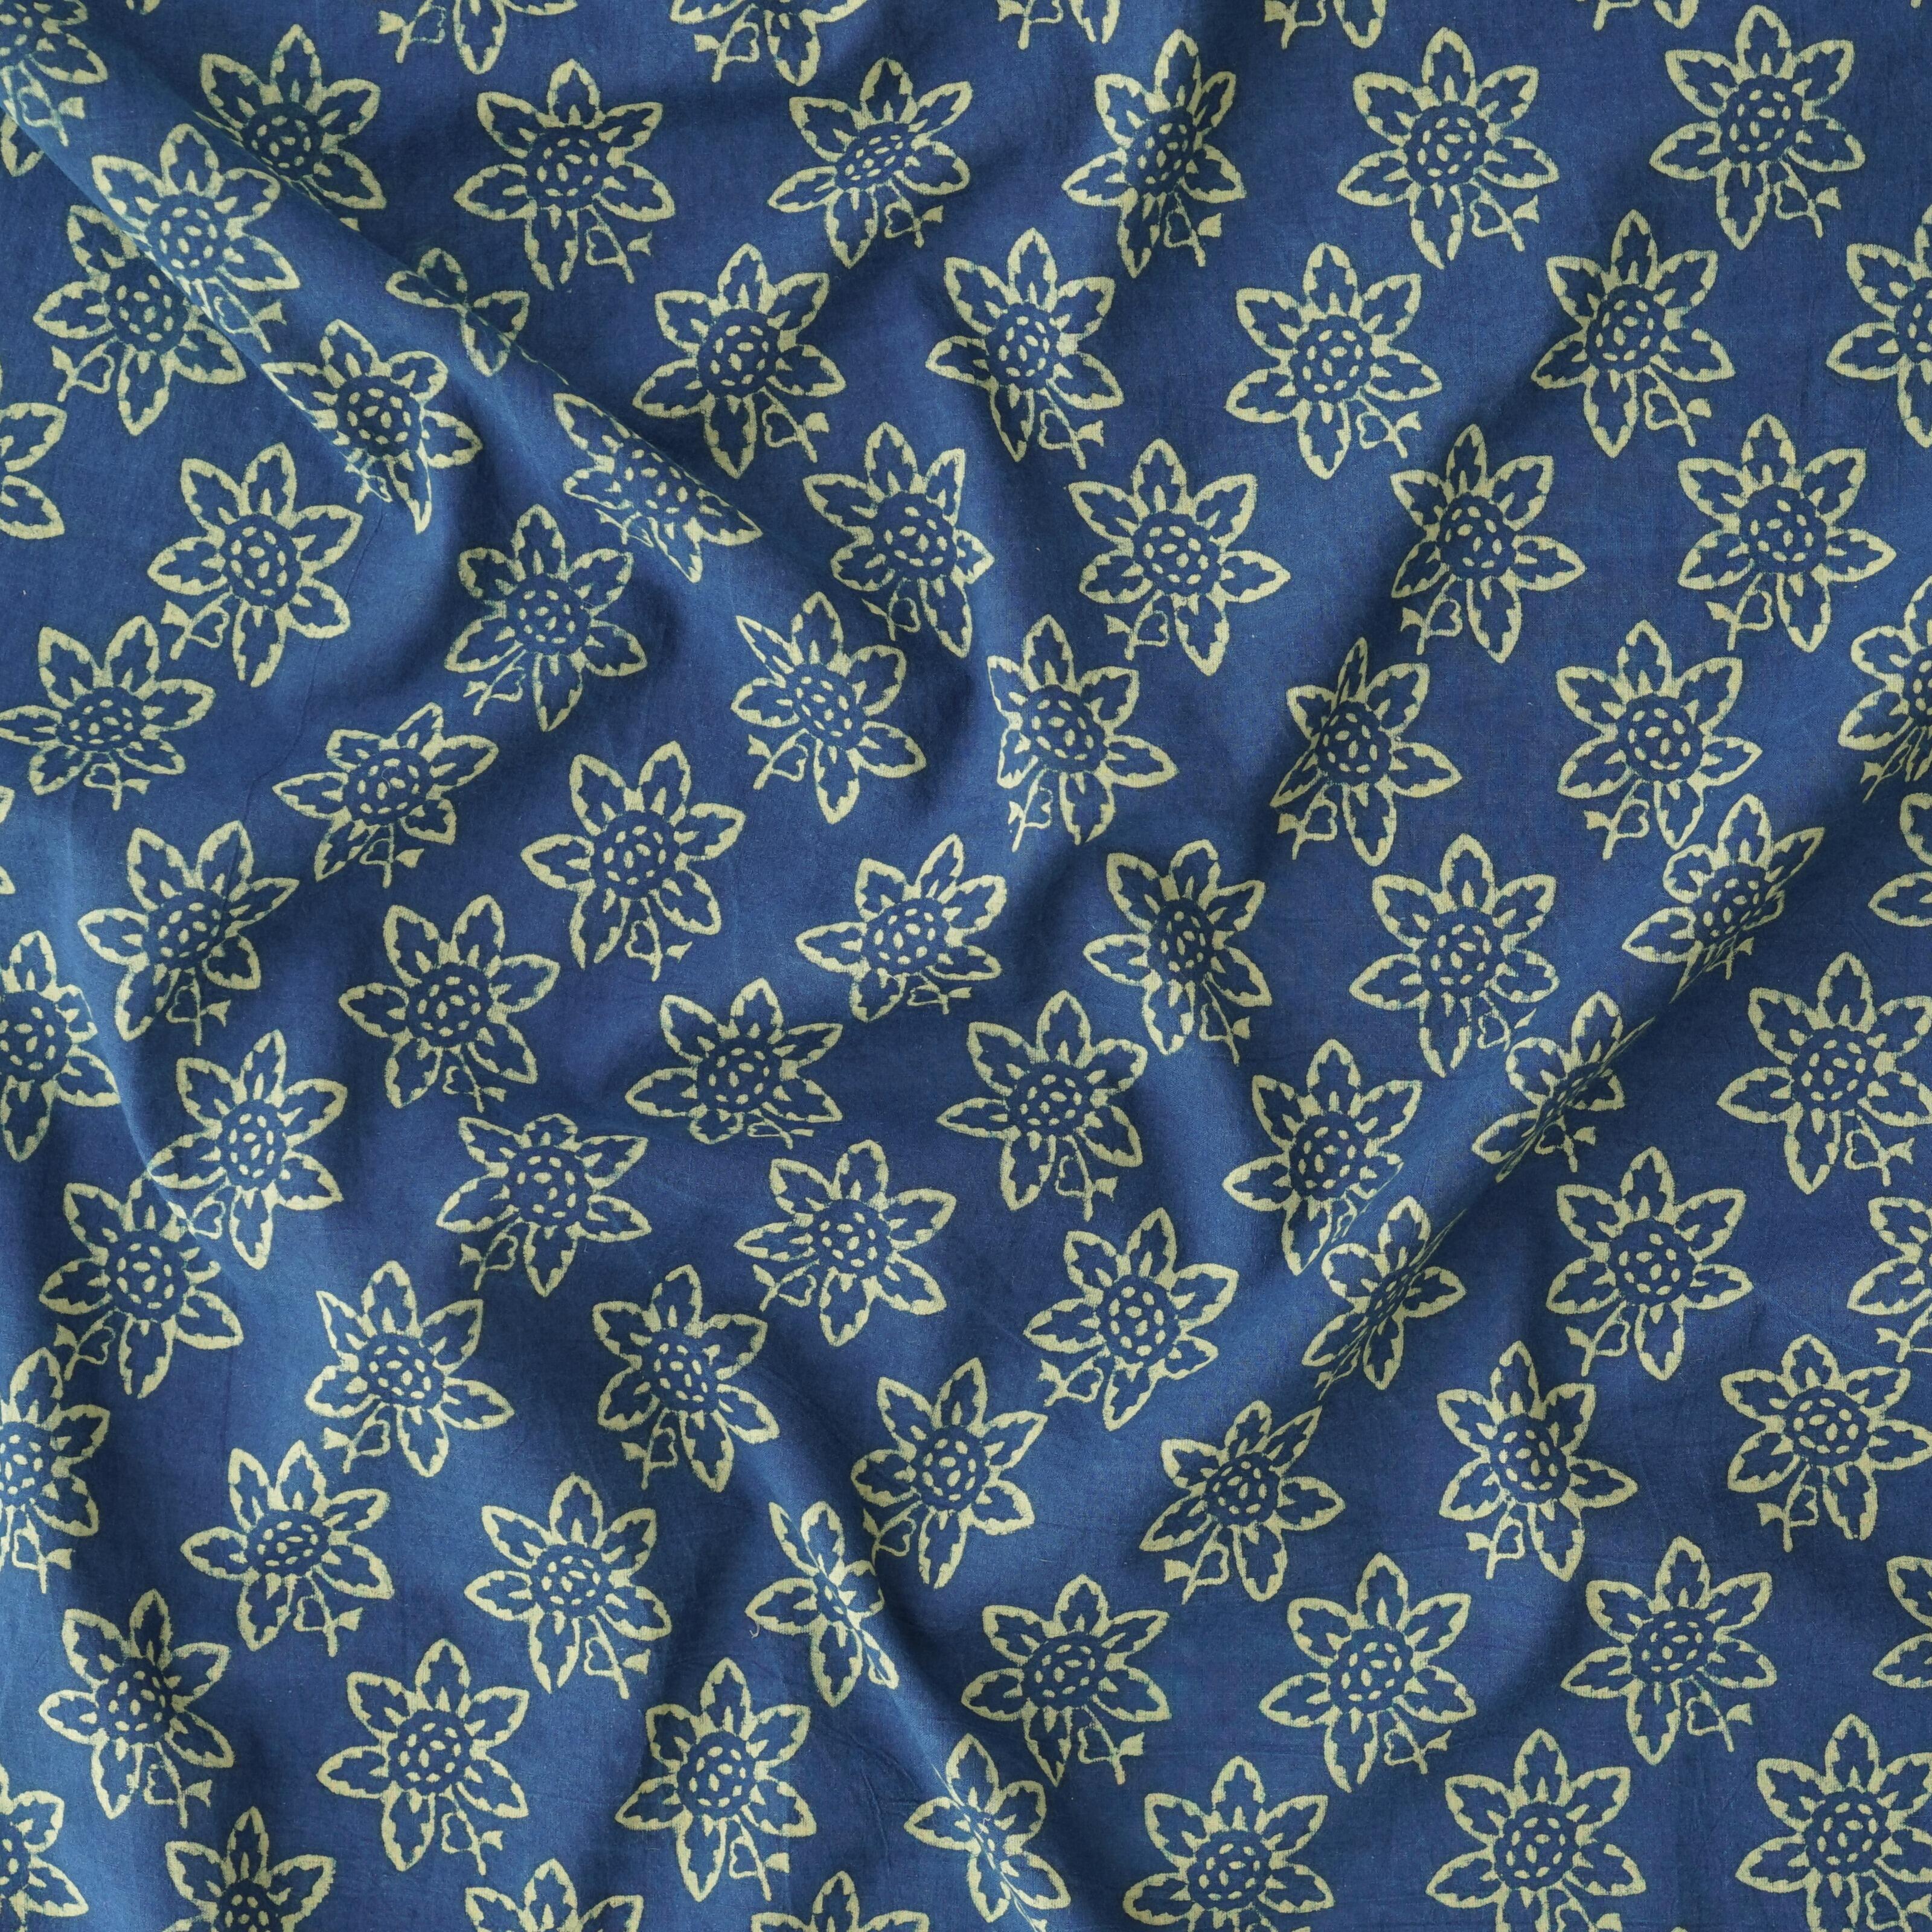 1 - AHM55 - Block-Printed Fabric - Flower Print - Indigo Blue & Tamarisk Yellow - Contrast